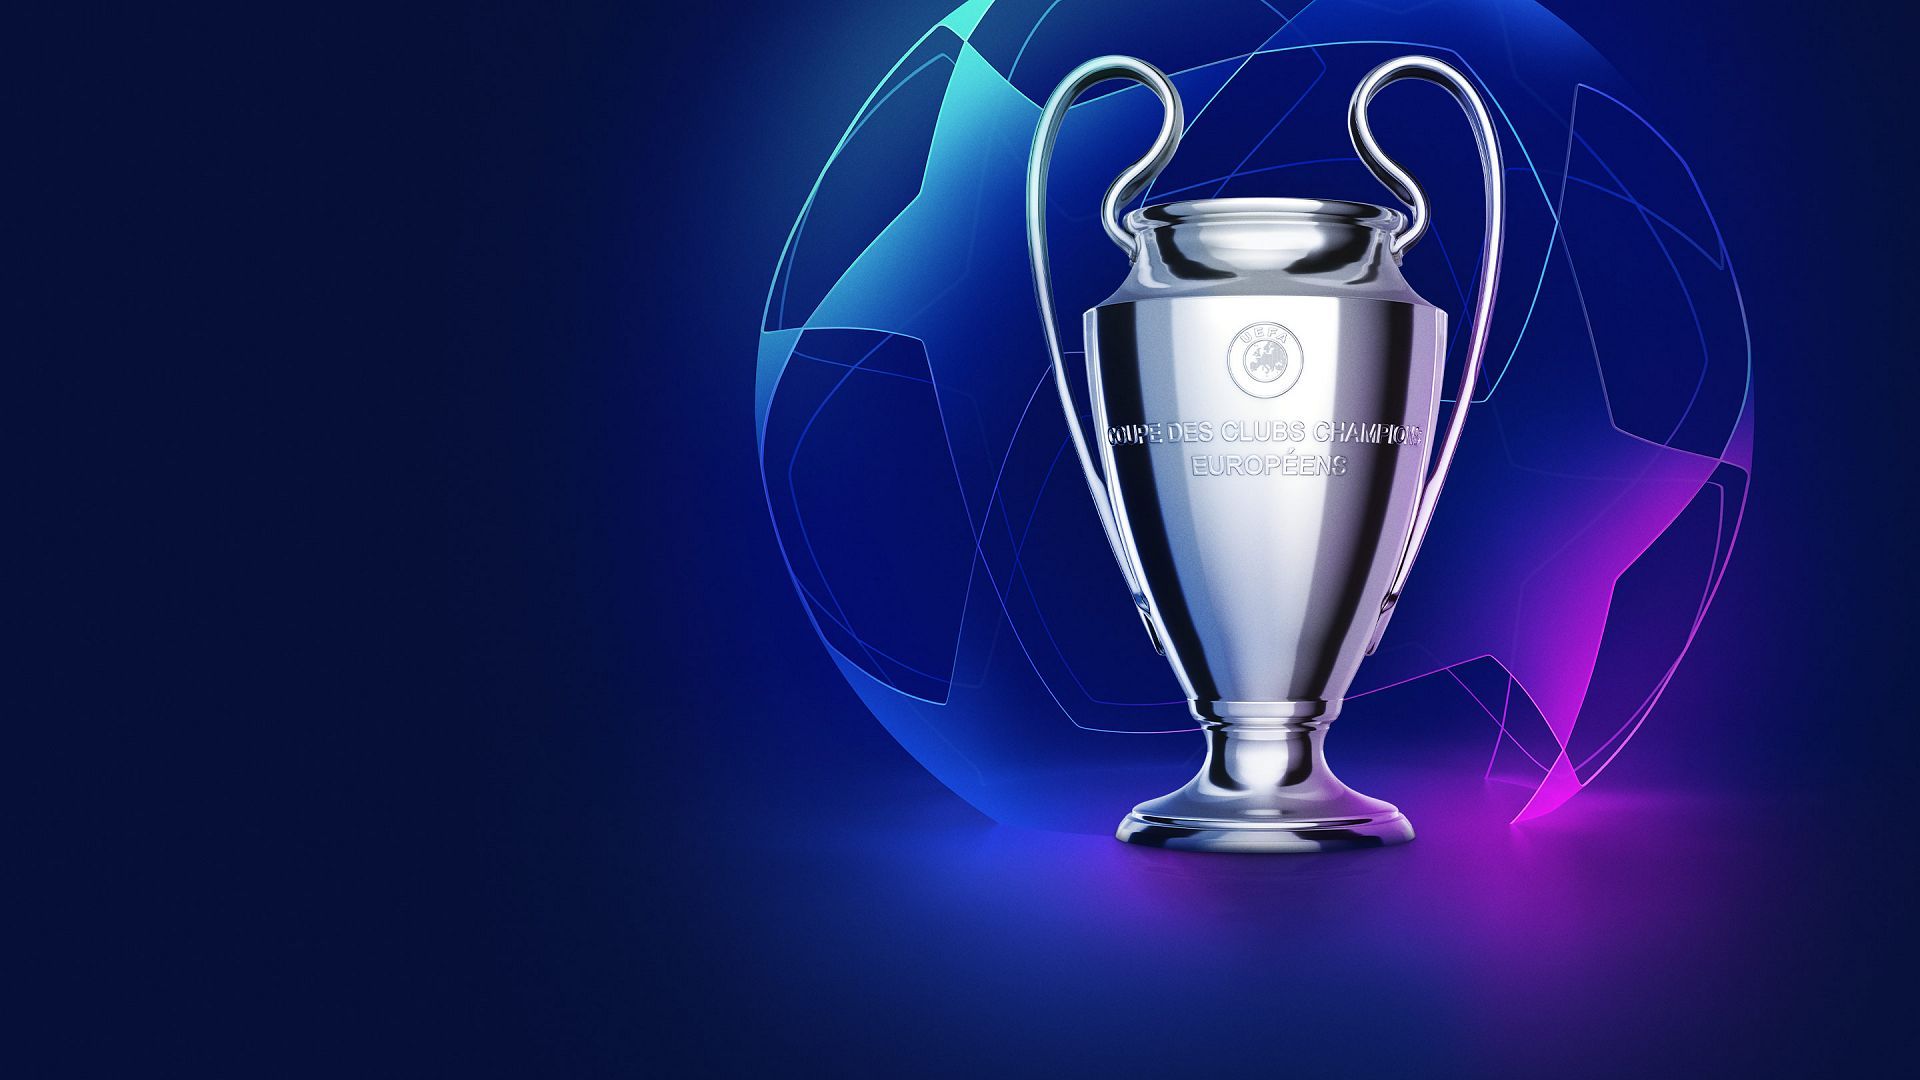 Watch UEFA Champions League matches live